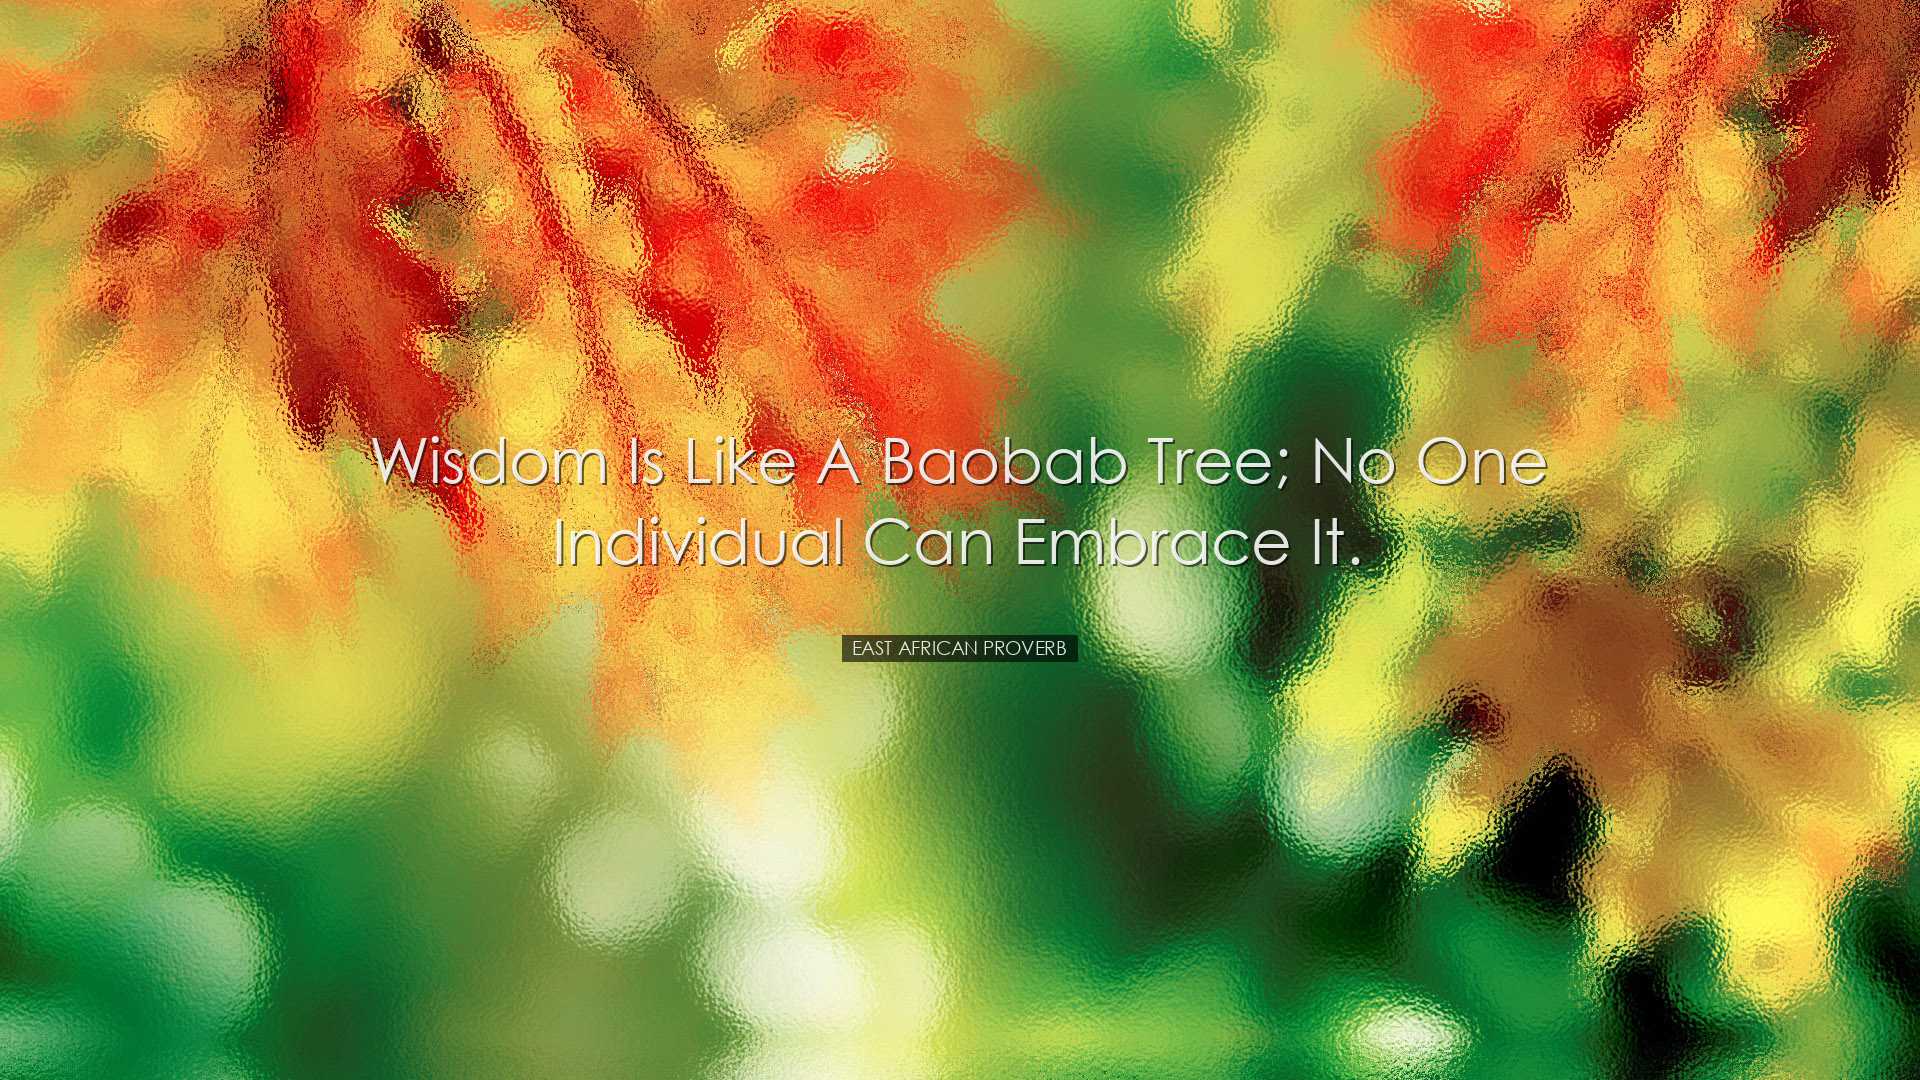 Wisdom is like a baobab tree; no one individual can embrace it. -